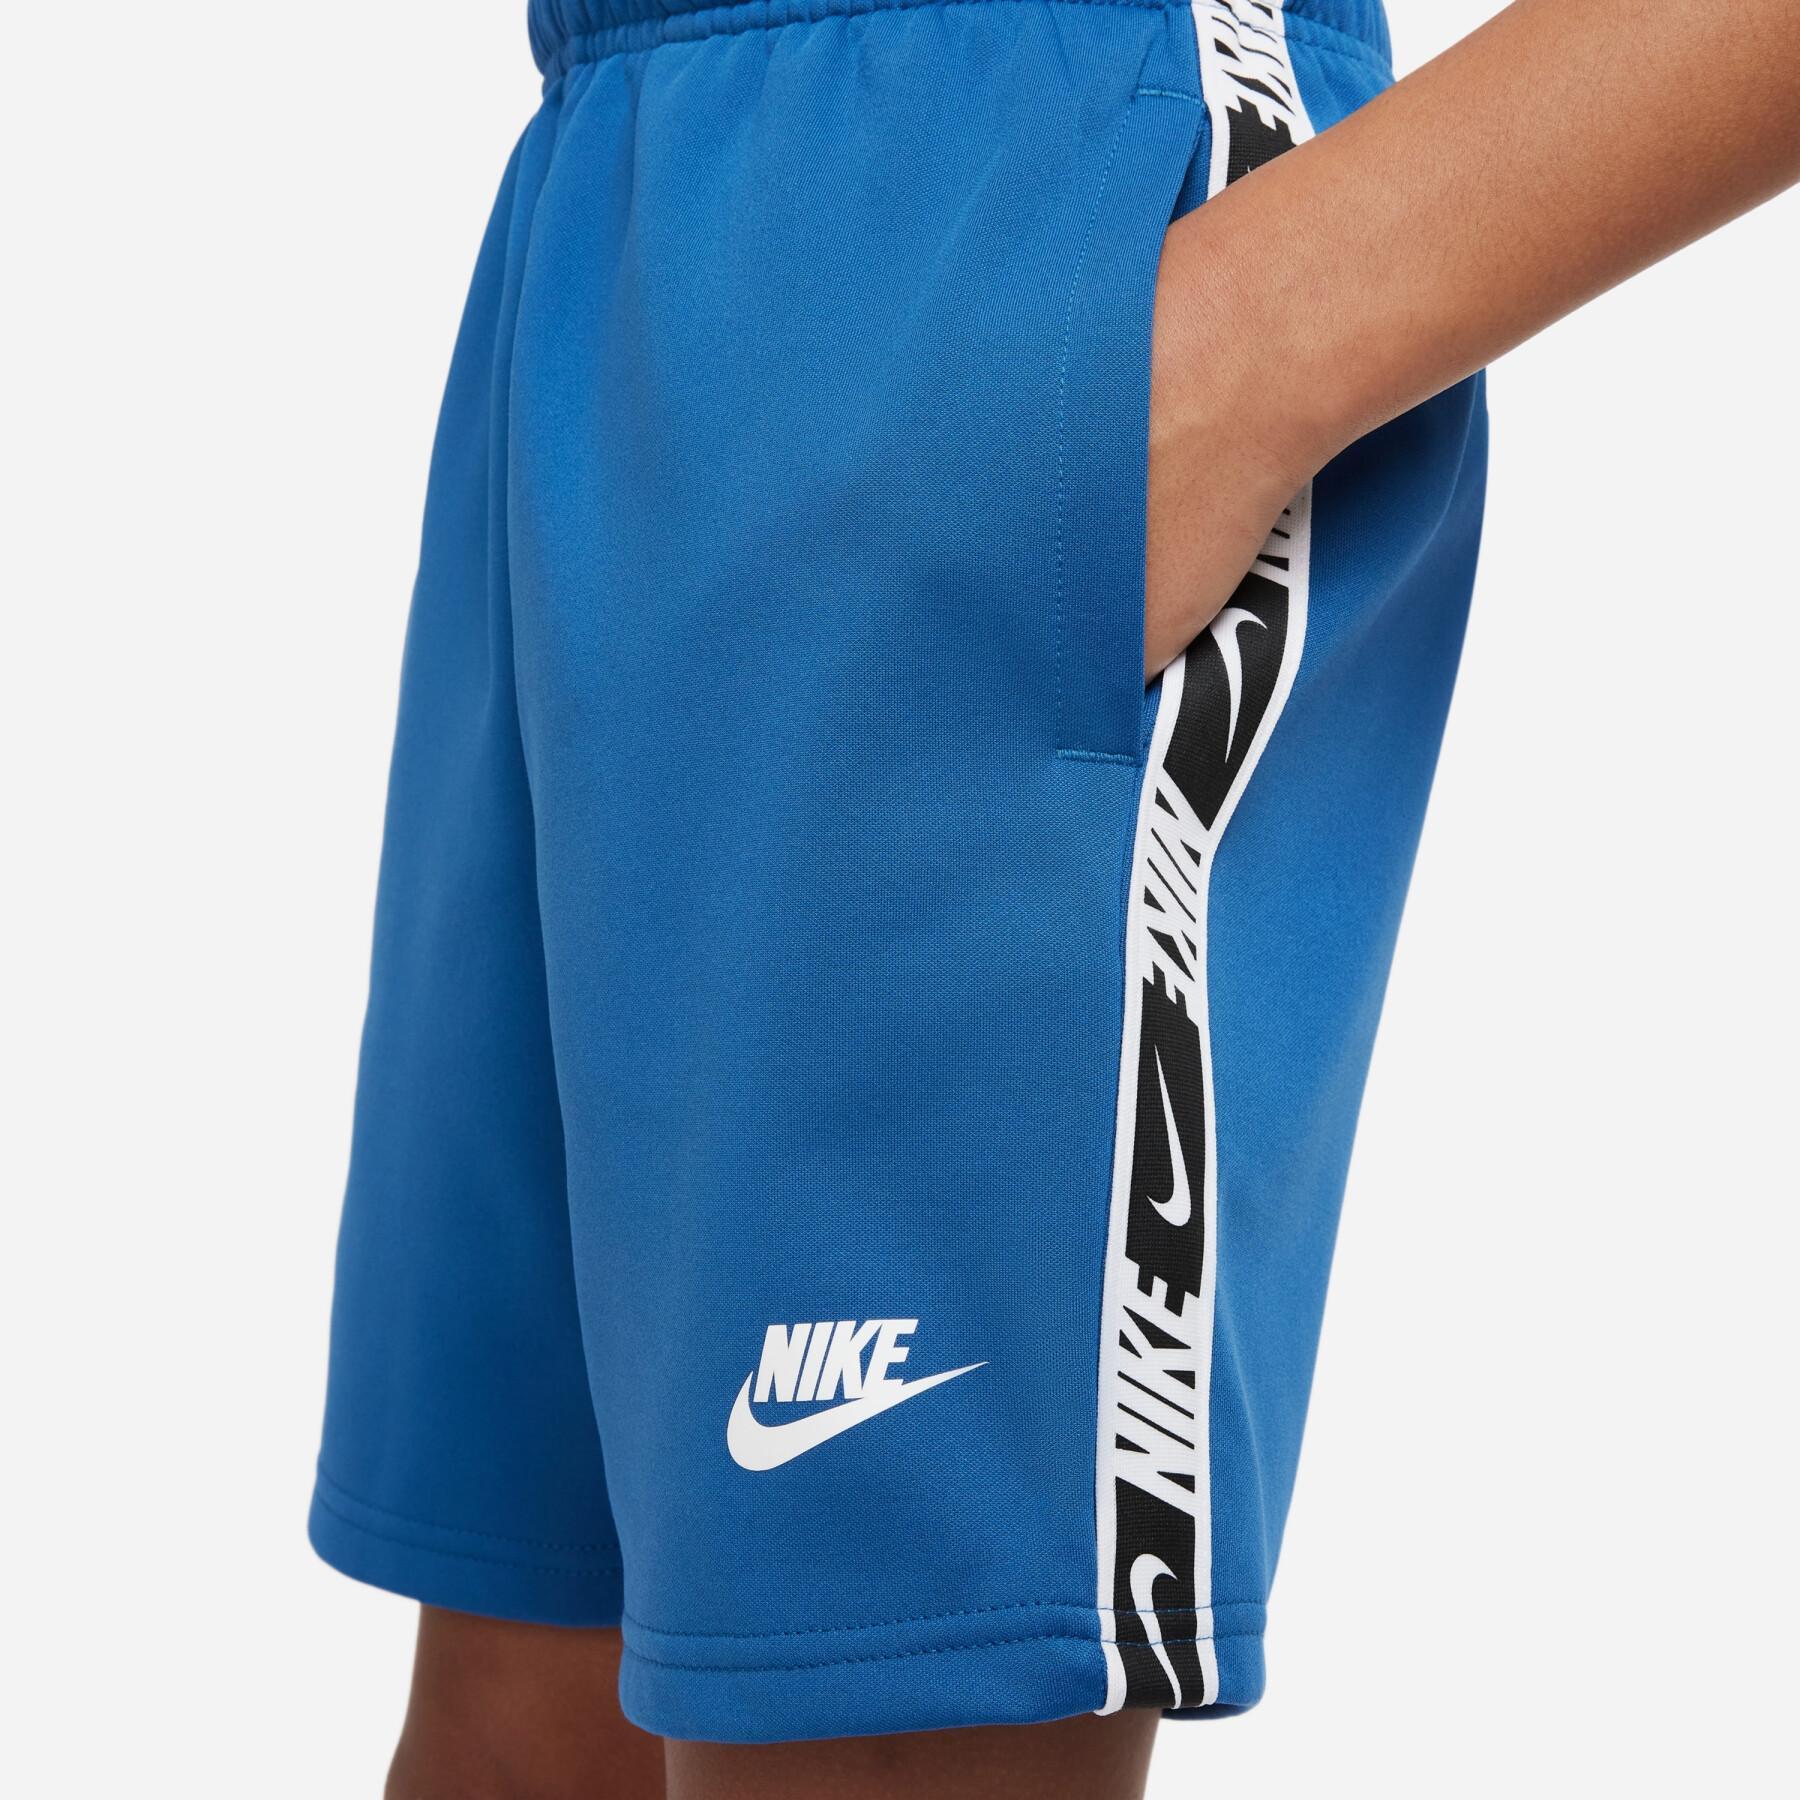 Shorts für Kinder Nike Repeat